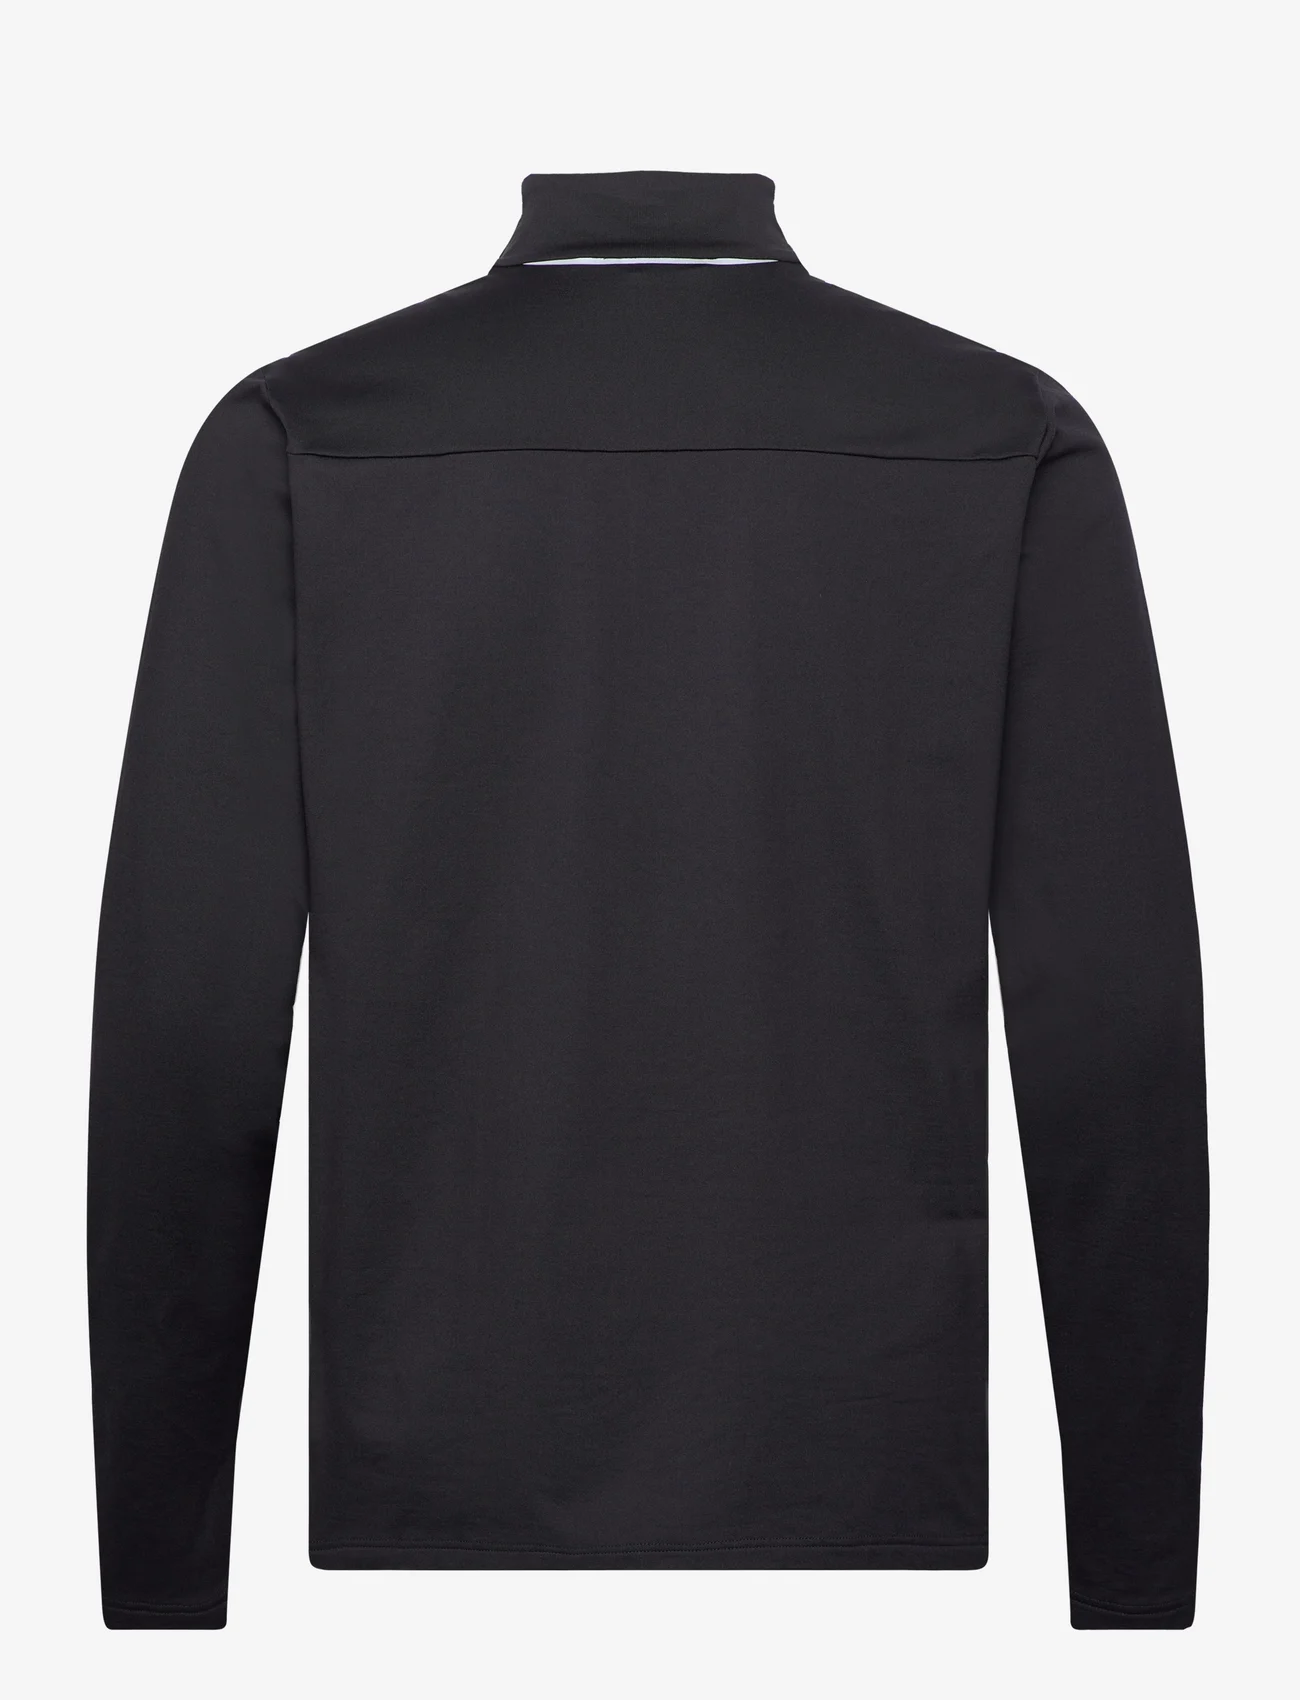 Casall - M Midlayer Half Zip - mid layer jackets - black - 1